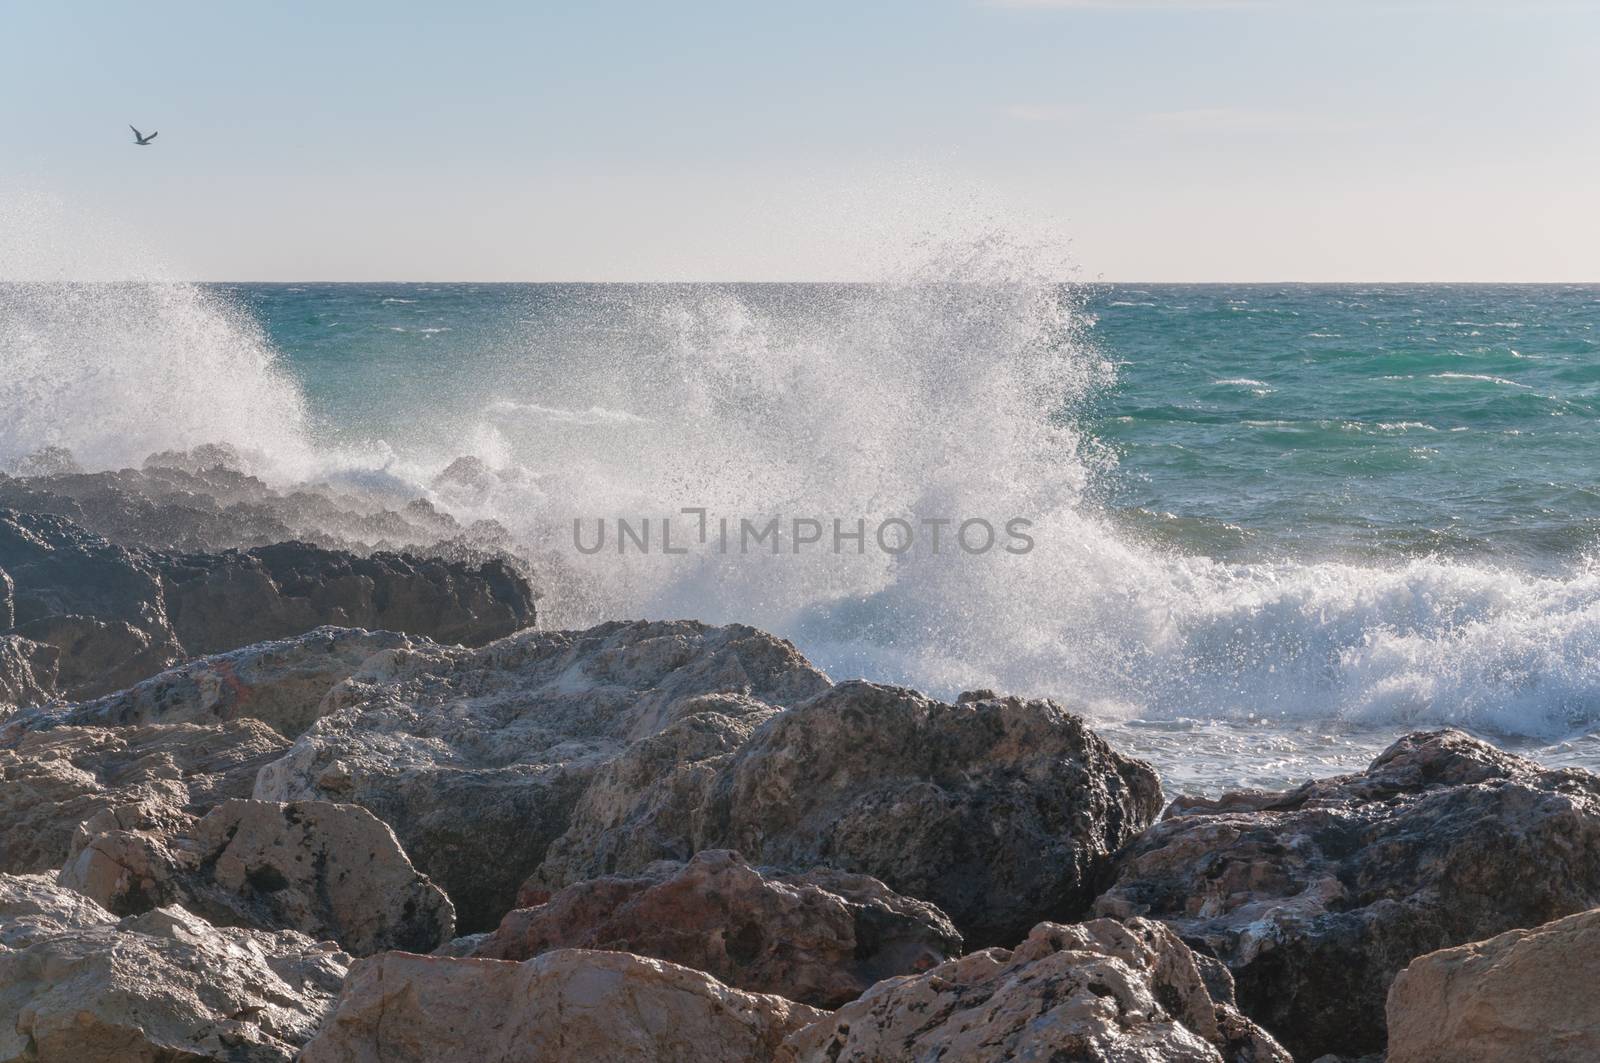 Crashing wave and bird. Wave crashing onto limestone rocks, birds flying to the left, Majorca, Balearic islands, Spain.